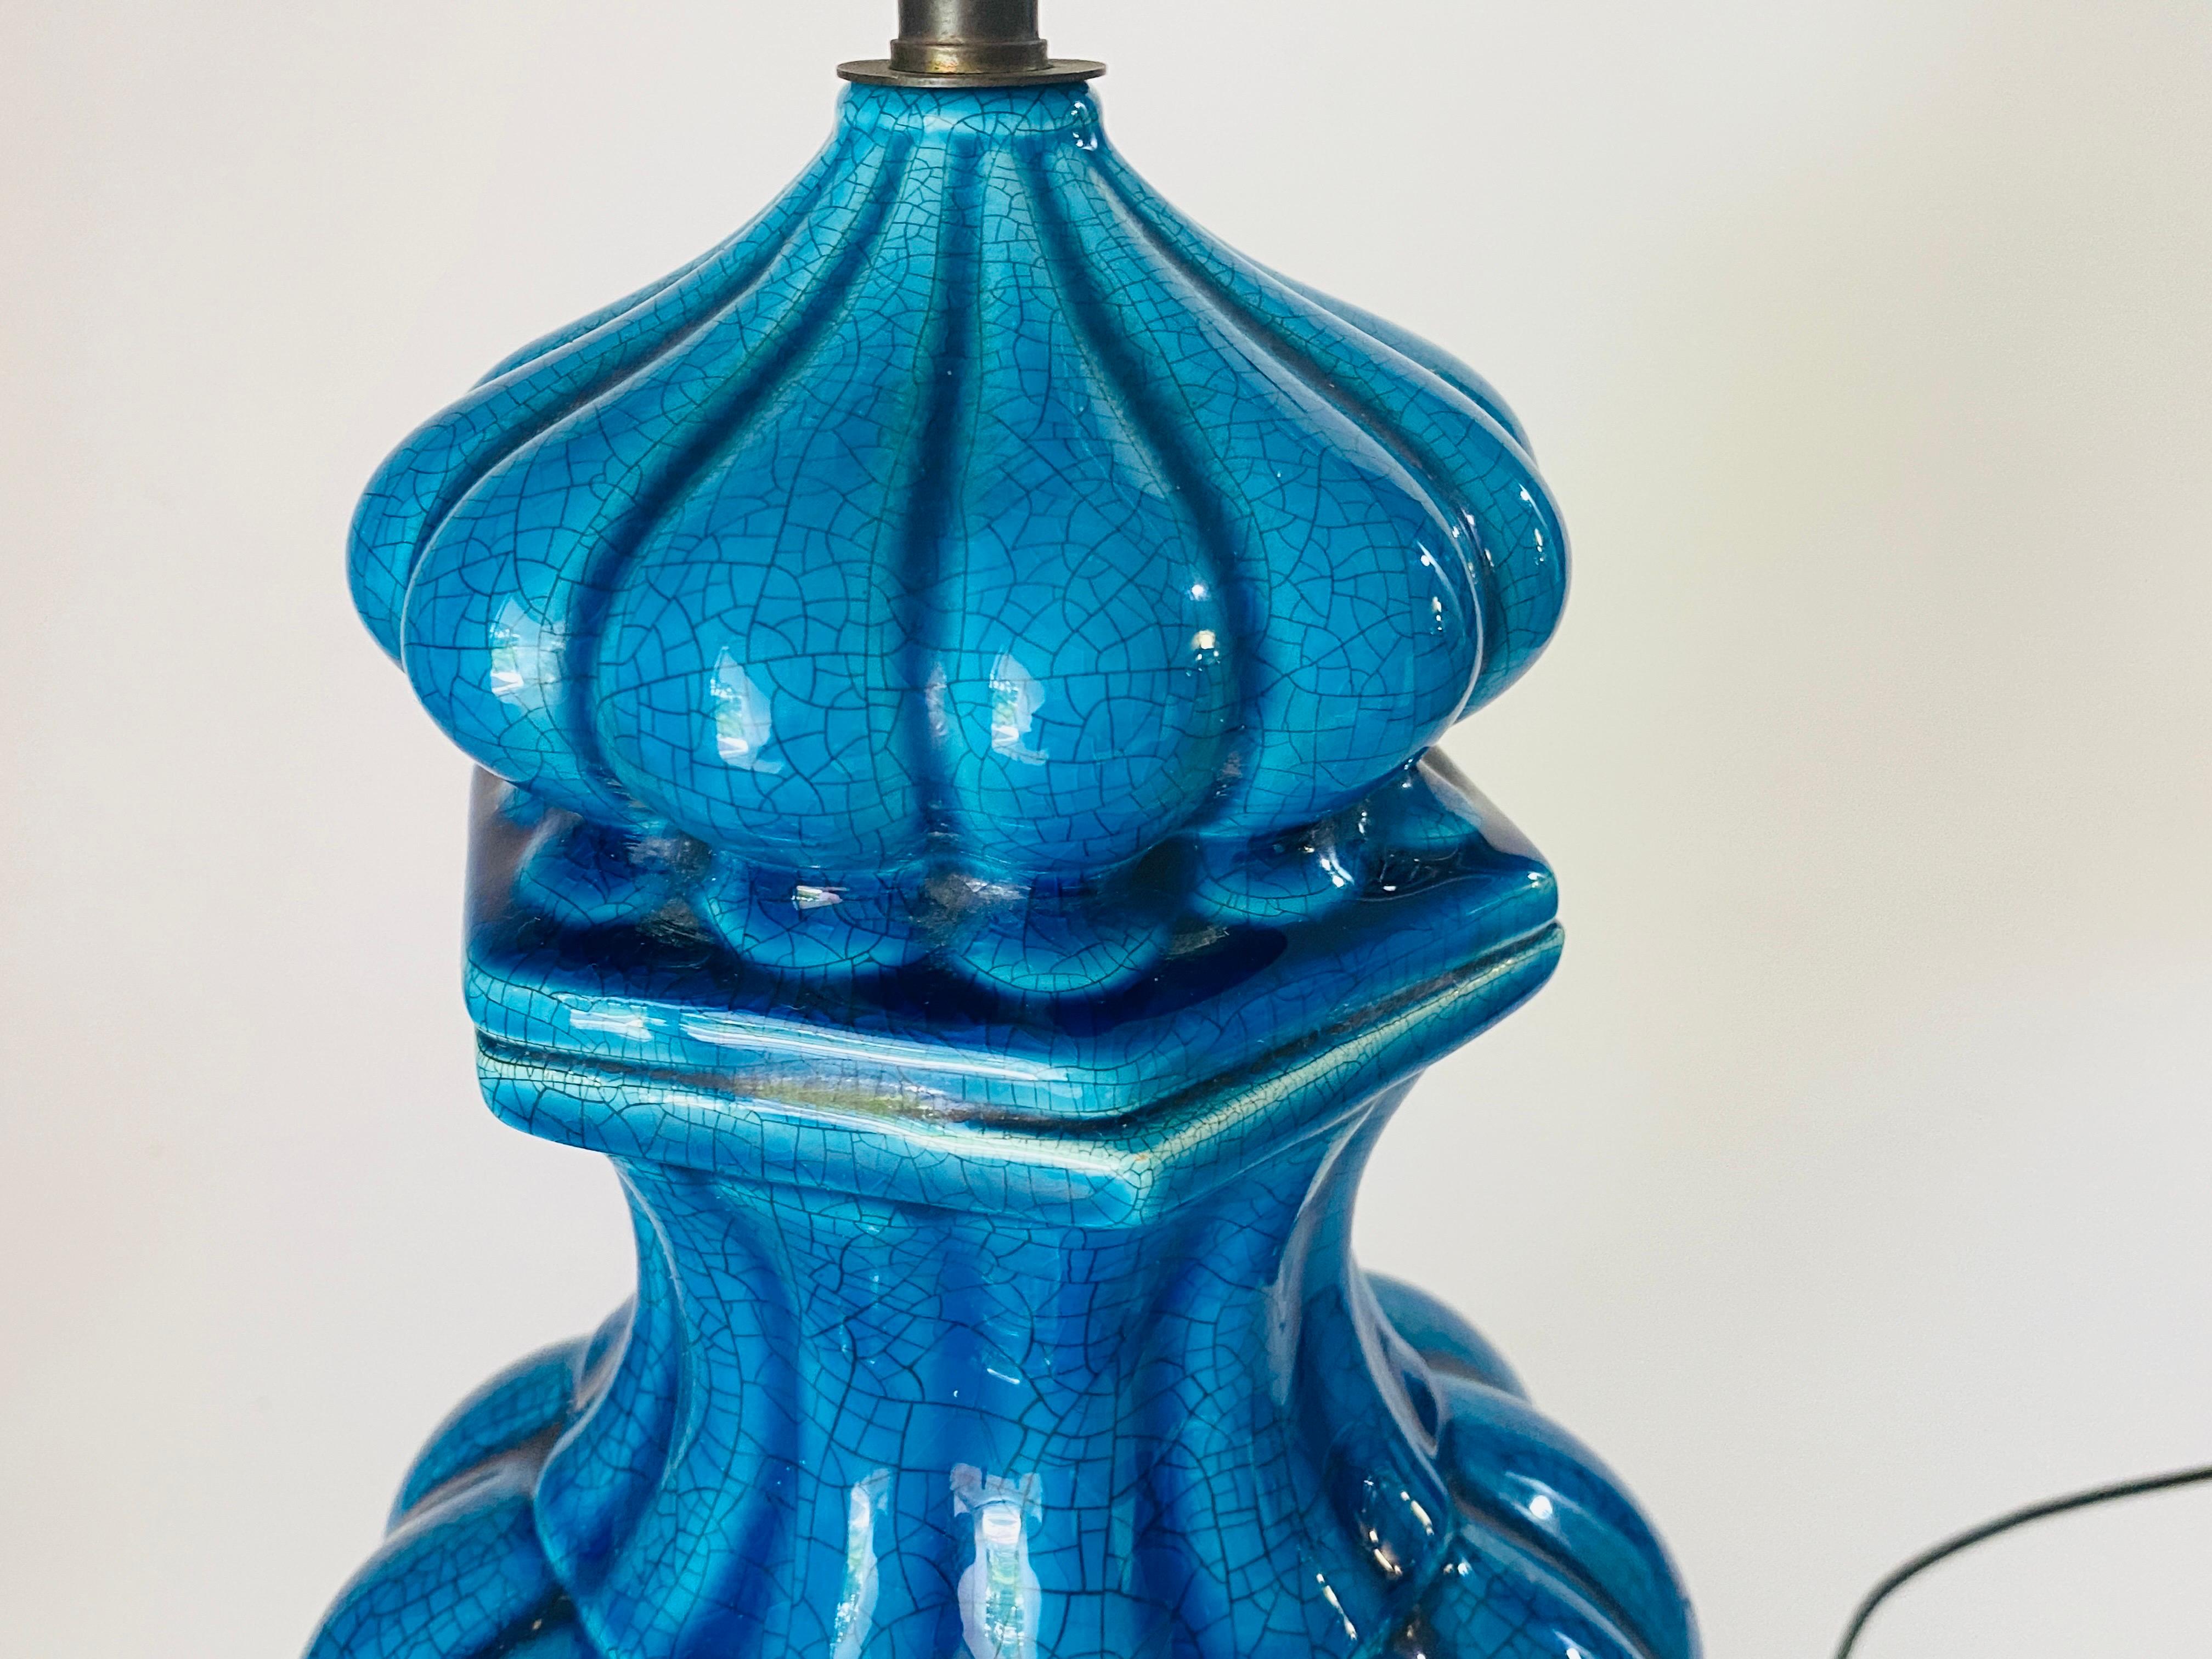 Table Lamp in Crakled Enemeled Blue Ceramic, France, 1970 For Sale 2